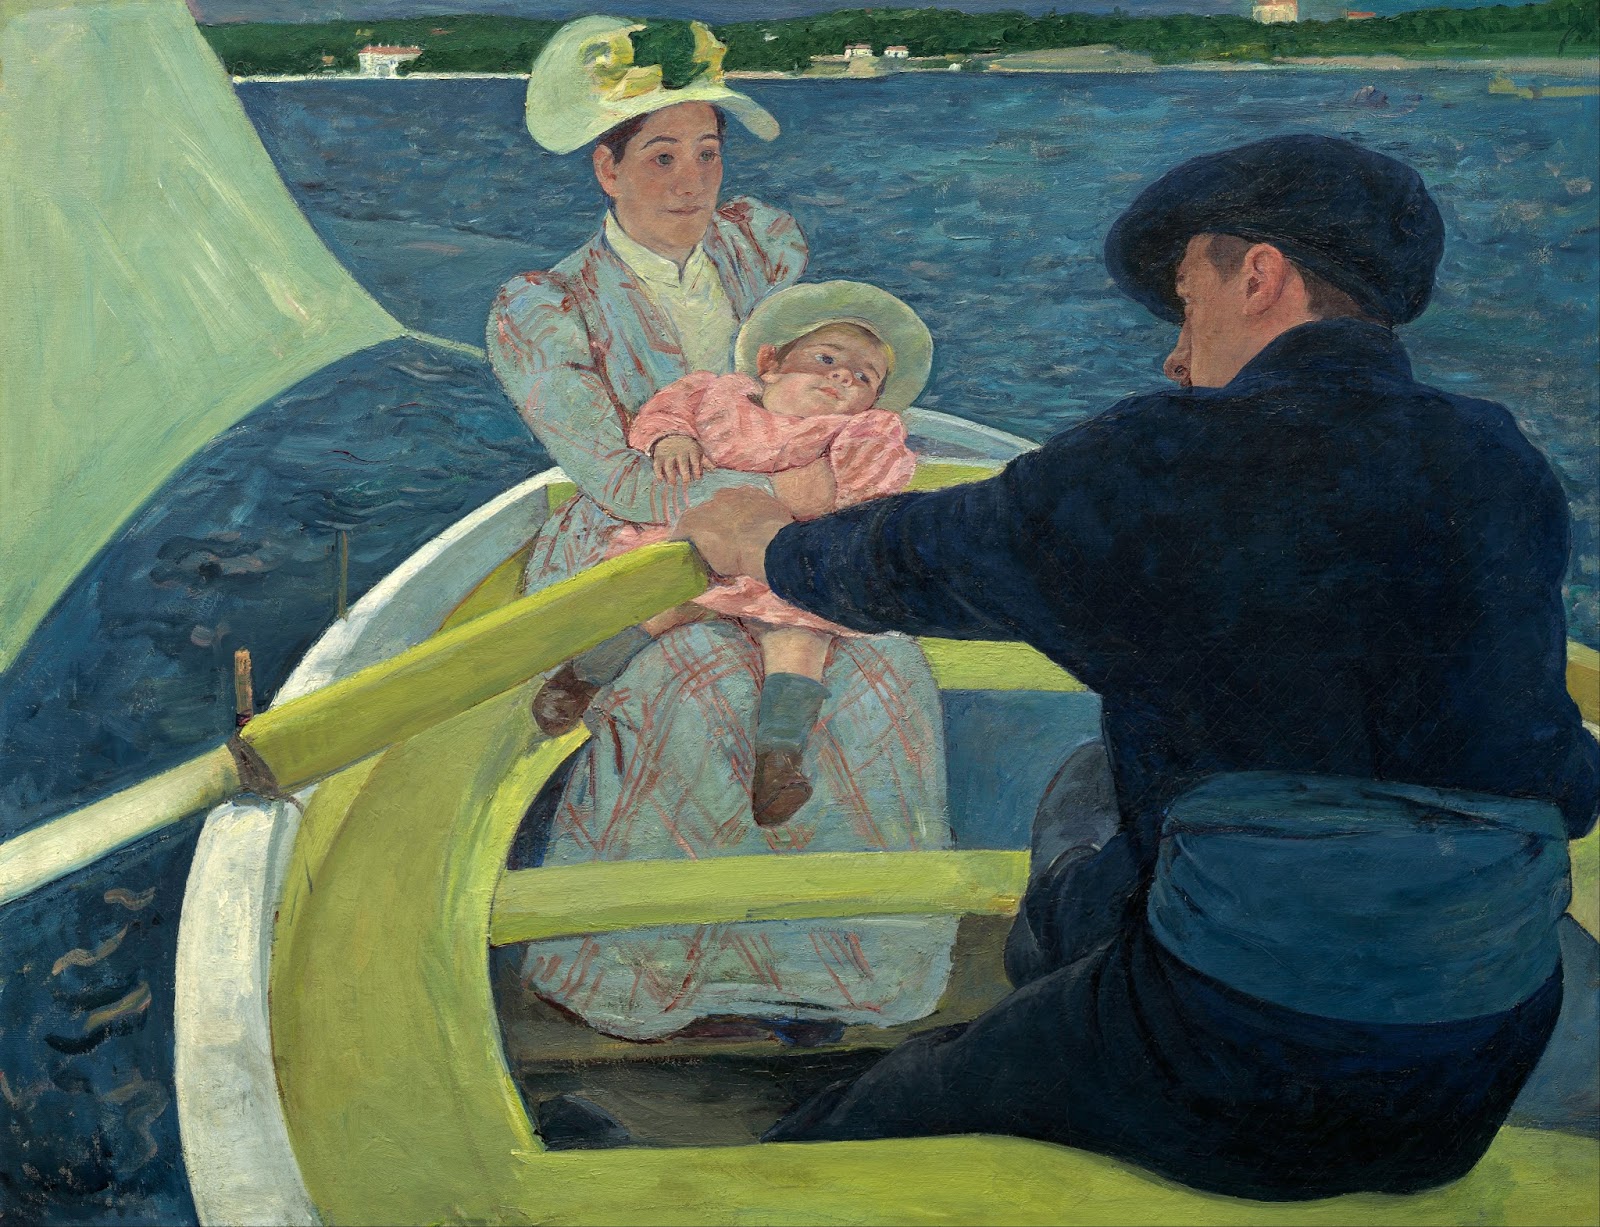 Le bateau en fête by Mary Cassatt - 1893–1894 